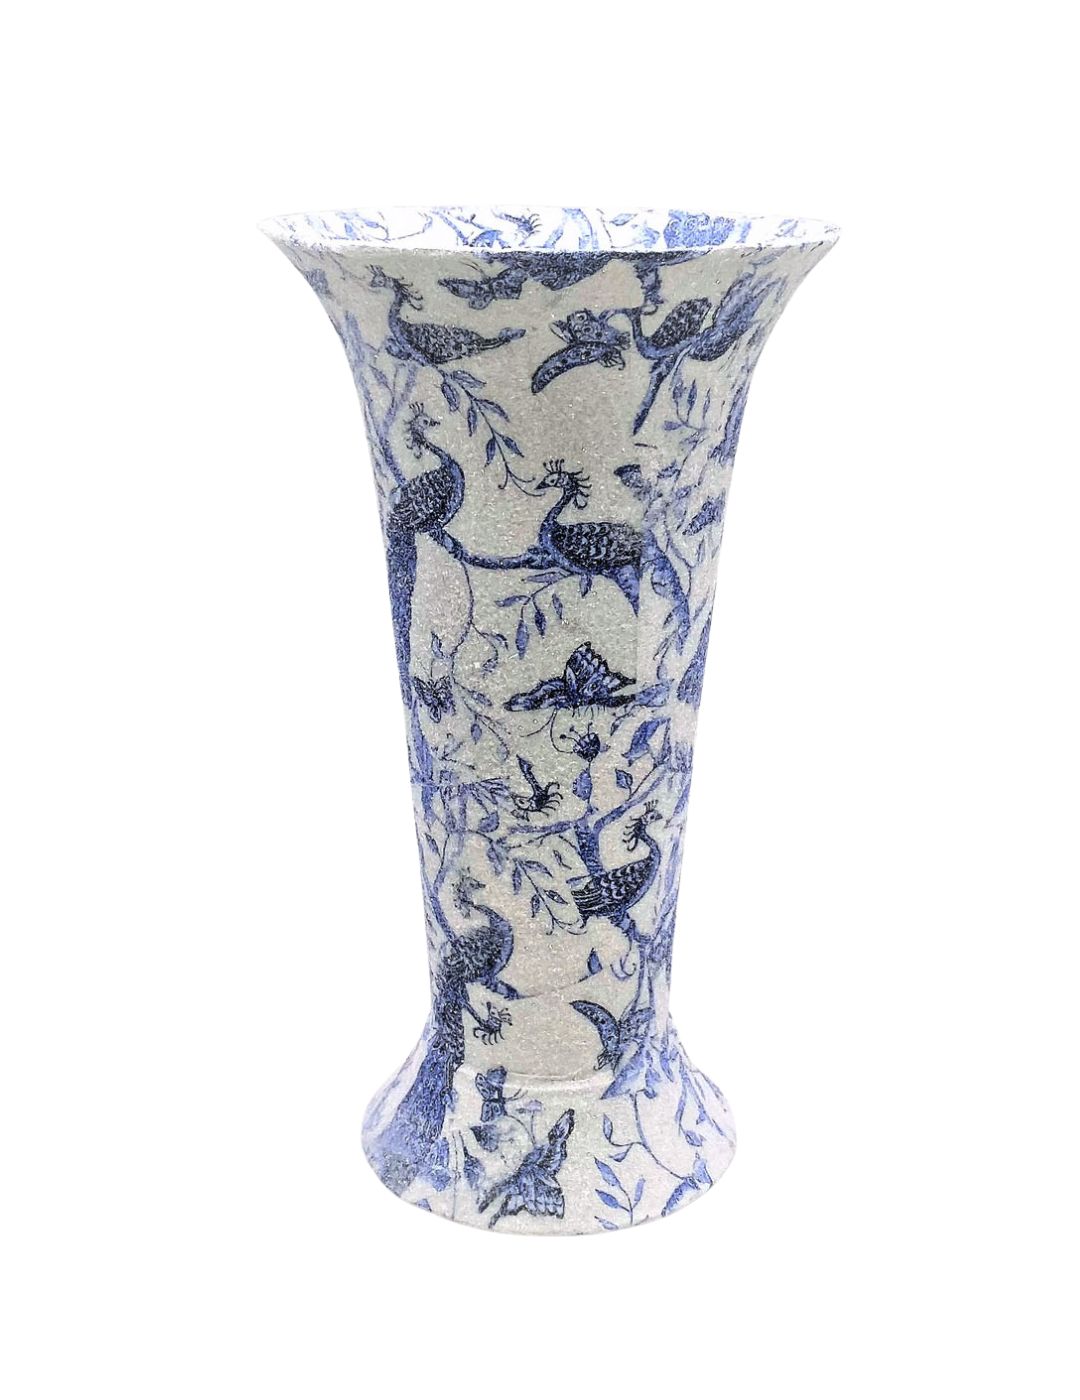 Trumpet Vase - Decoupage Chinoiserie, Blue